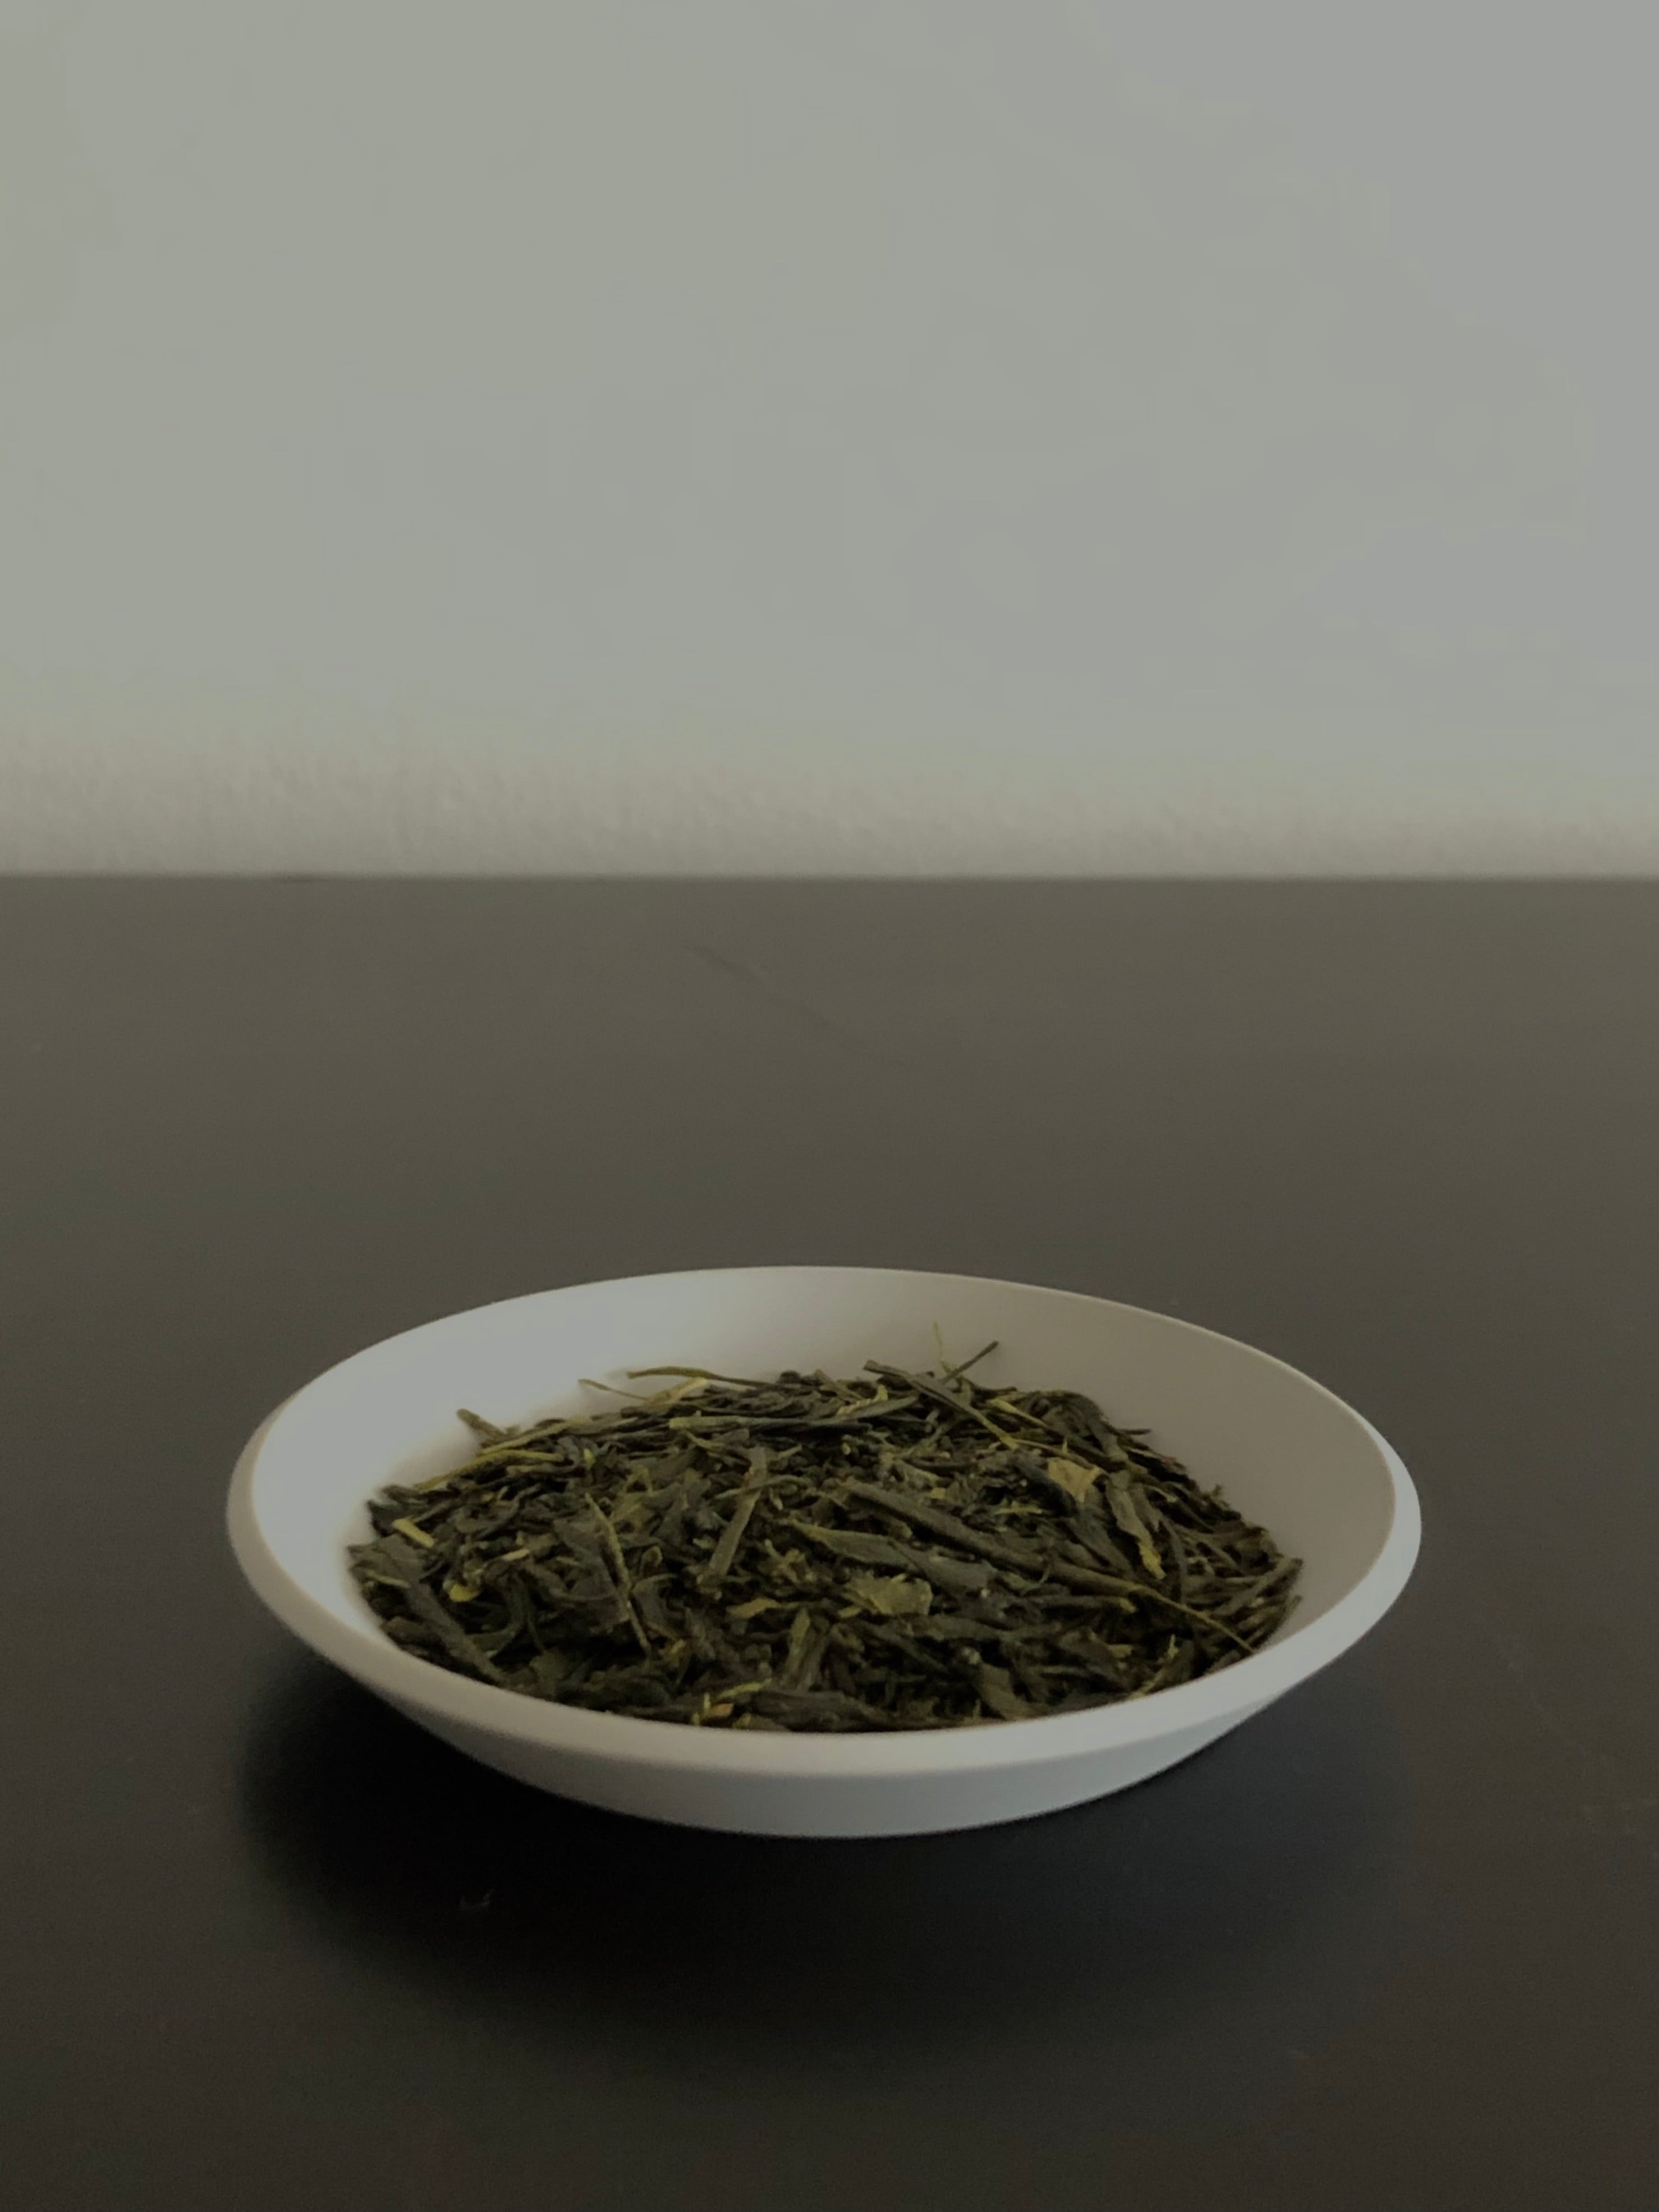 Yukifuruyama sencha green tea loose leaf side view from Yame Fukuoka sold by Sabo Tea Australia – Chiyonoen